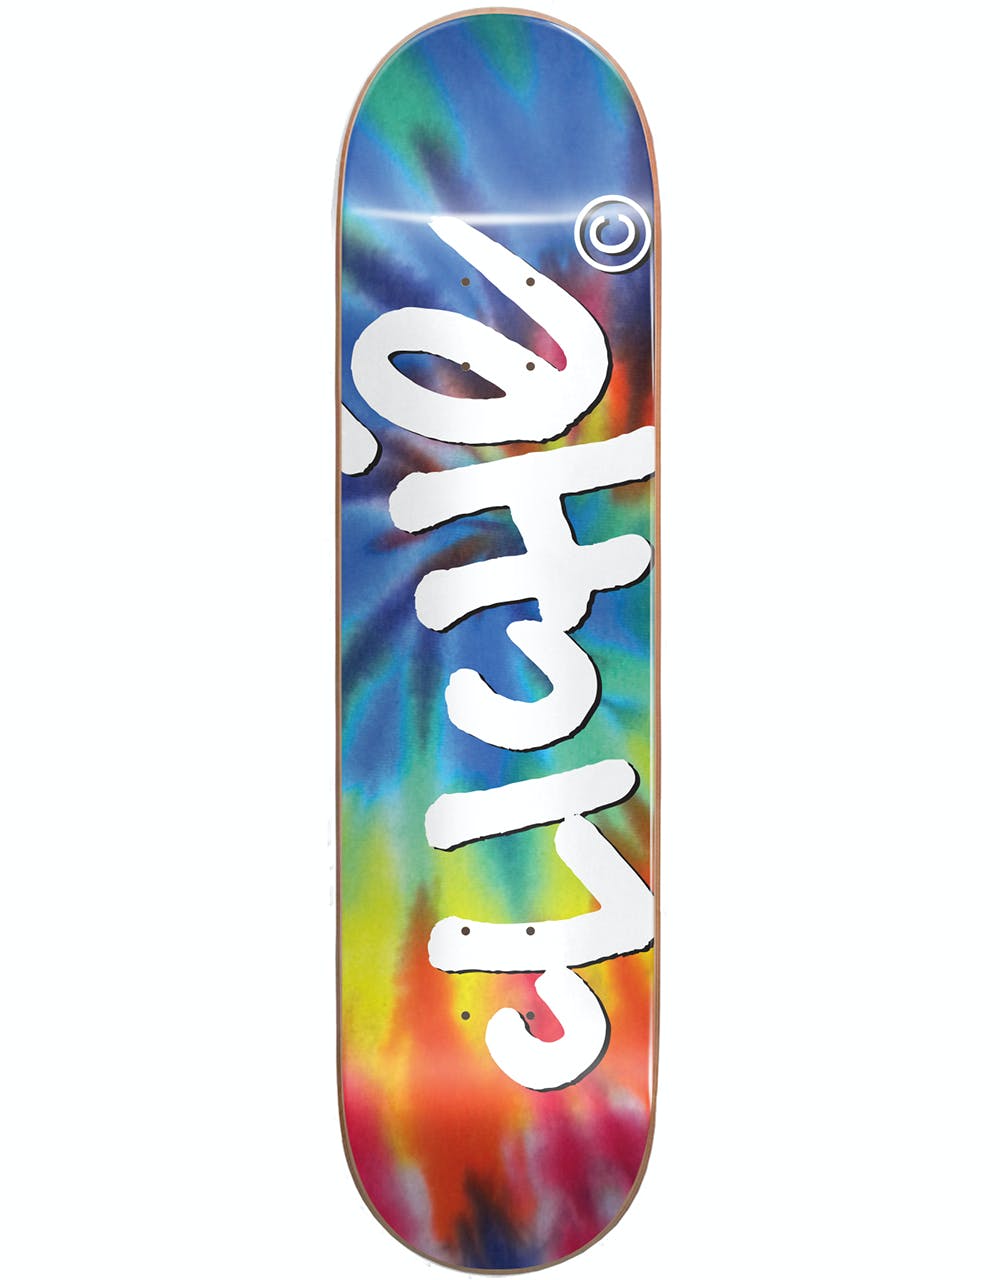 Cliché Handwritten Tie Dye RHM Skateboard Deck - 8.25"